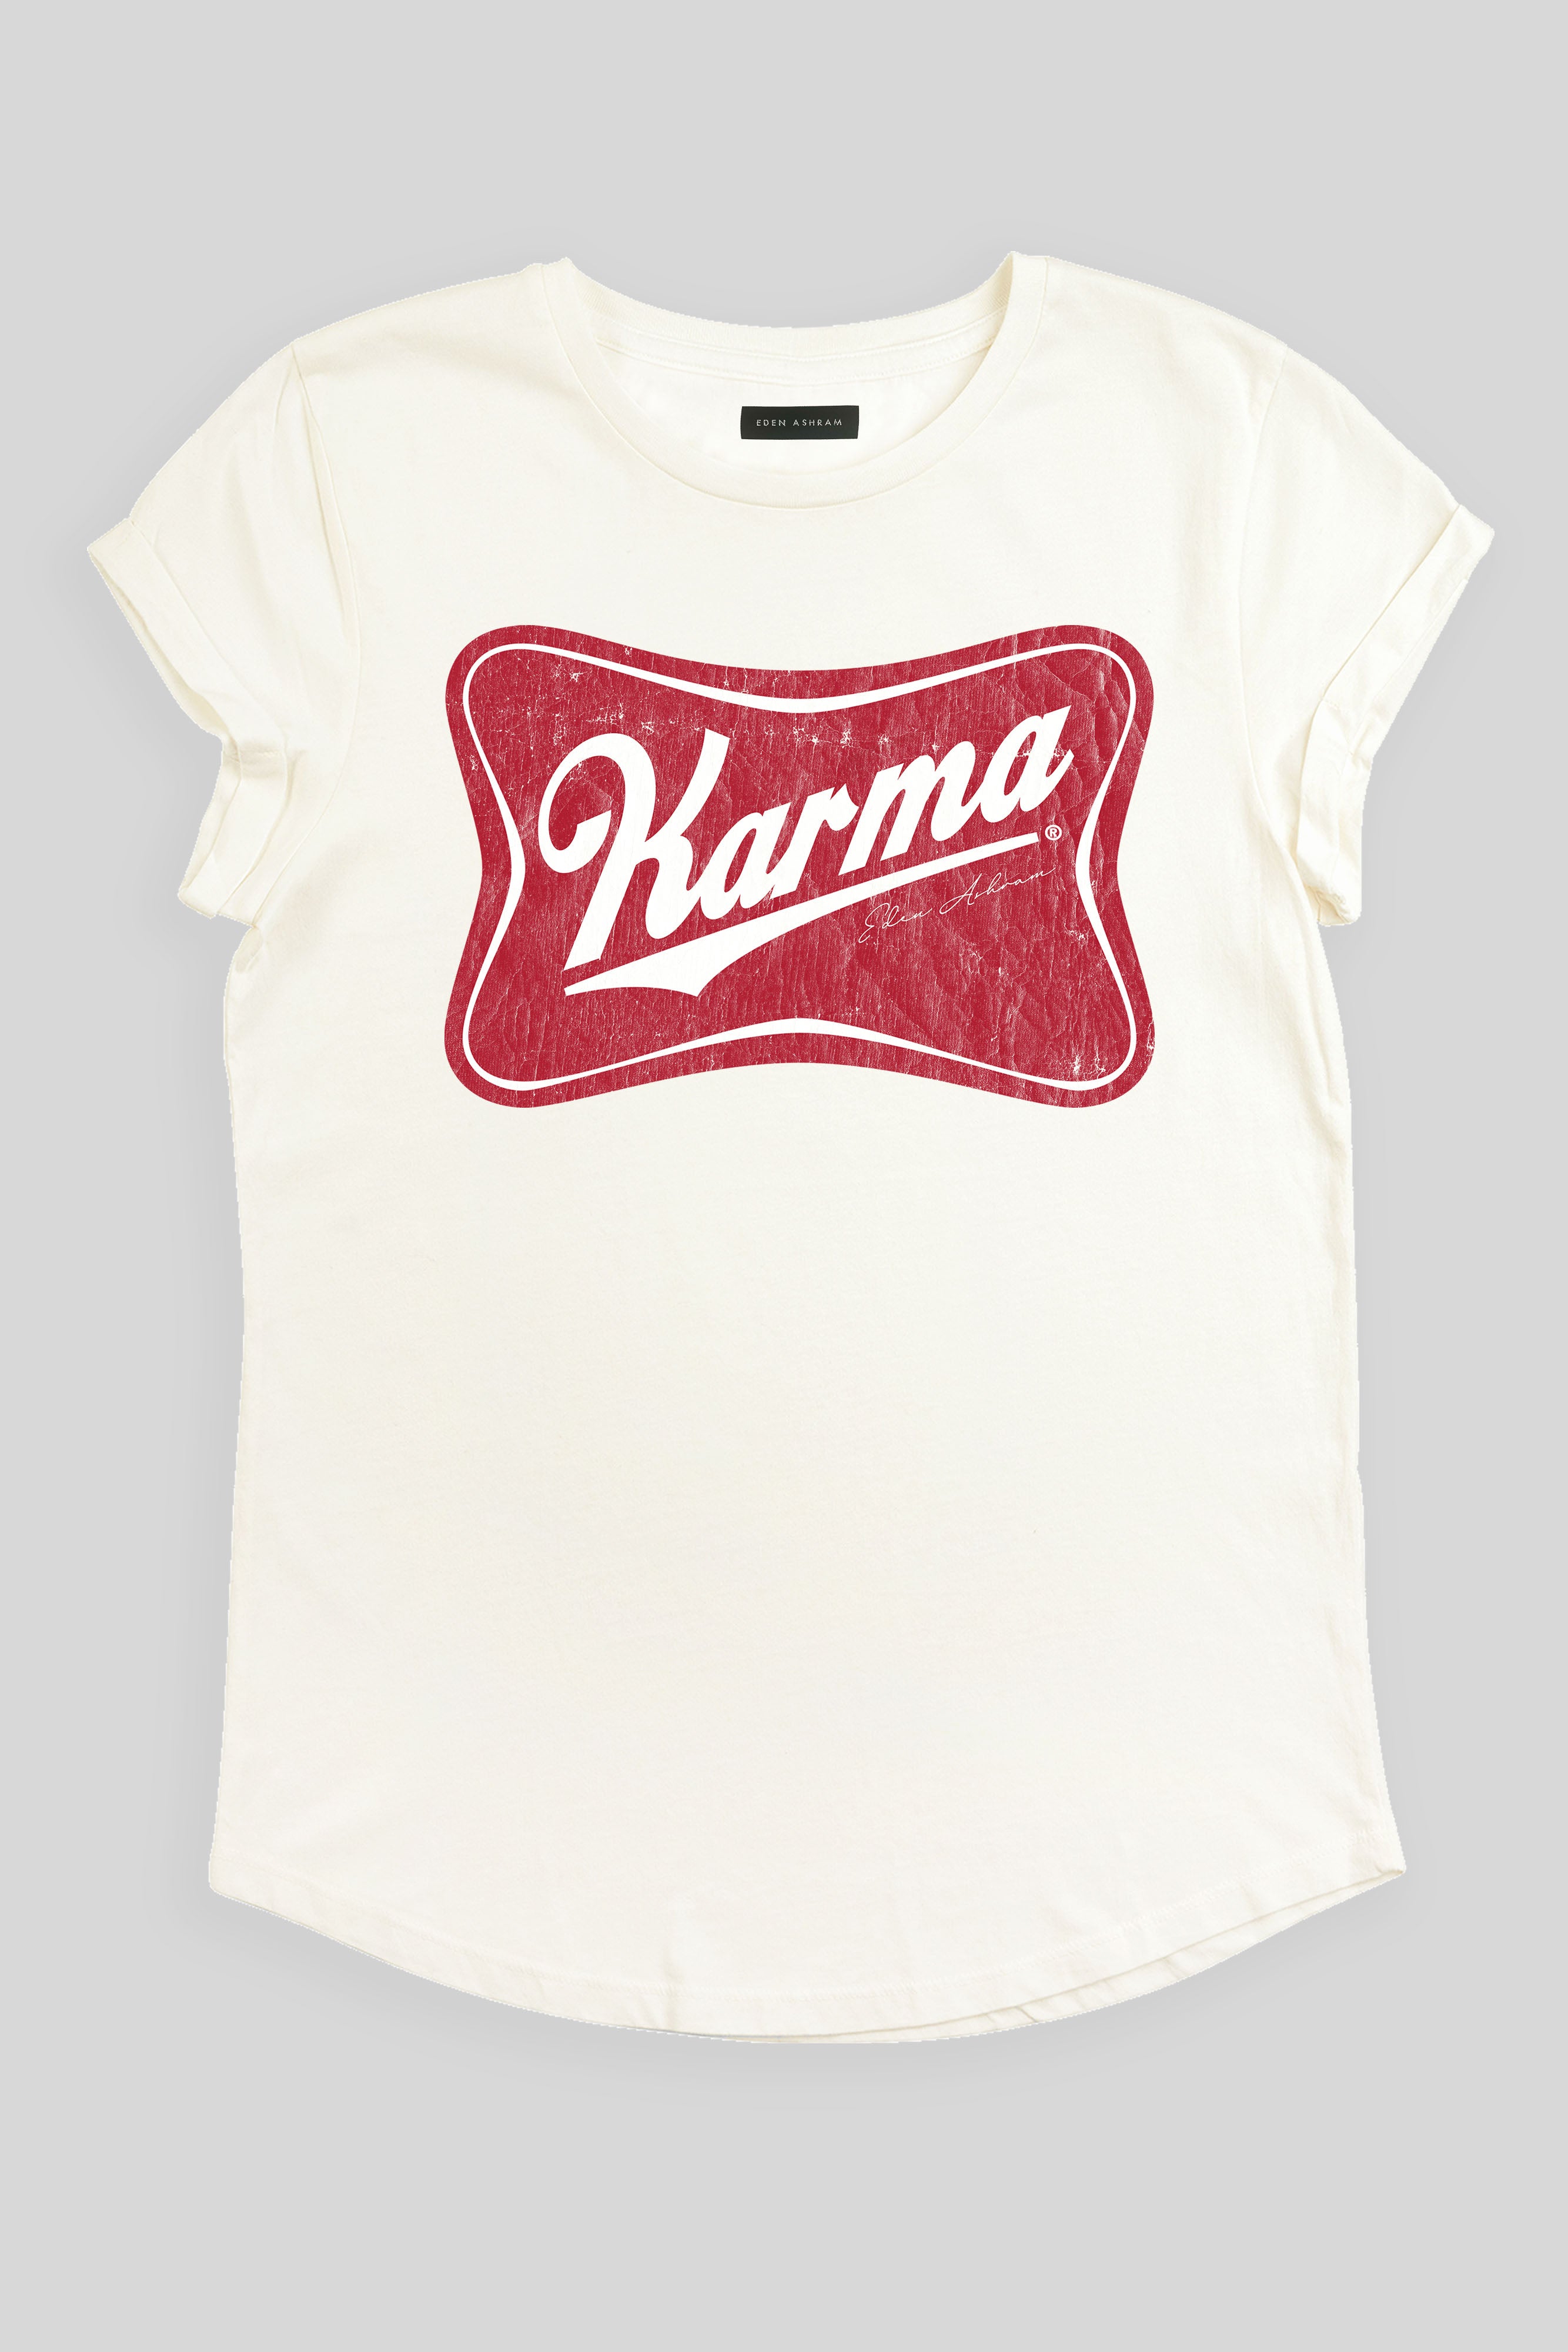 Eden Ashram Karma Beer Rolled Sleeve T-Shirt Stonewash White